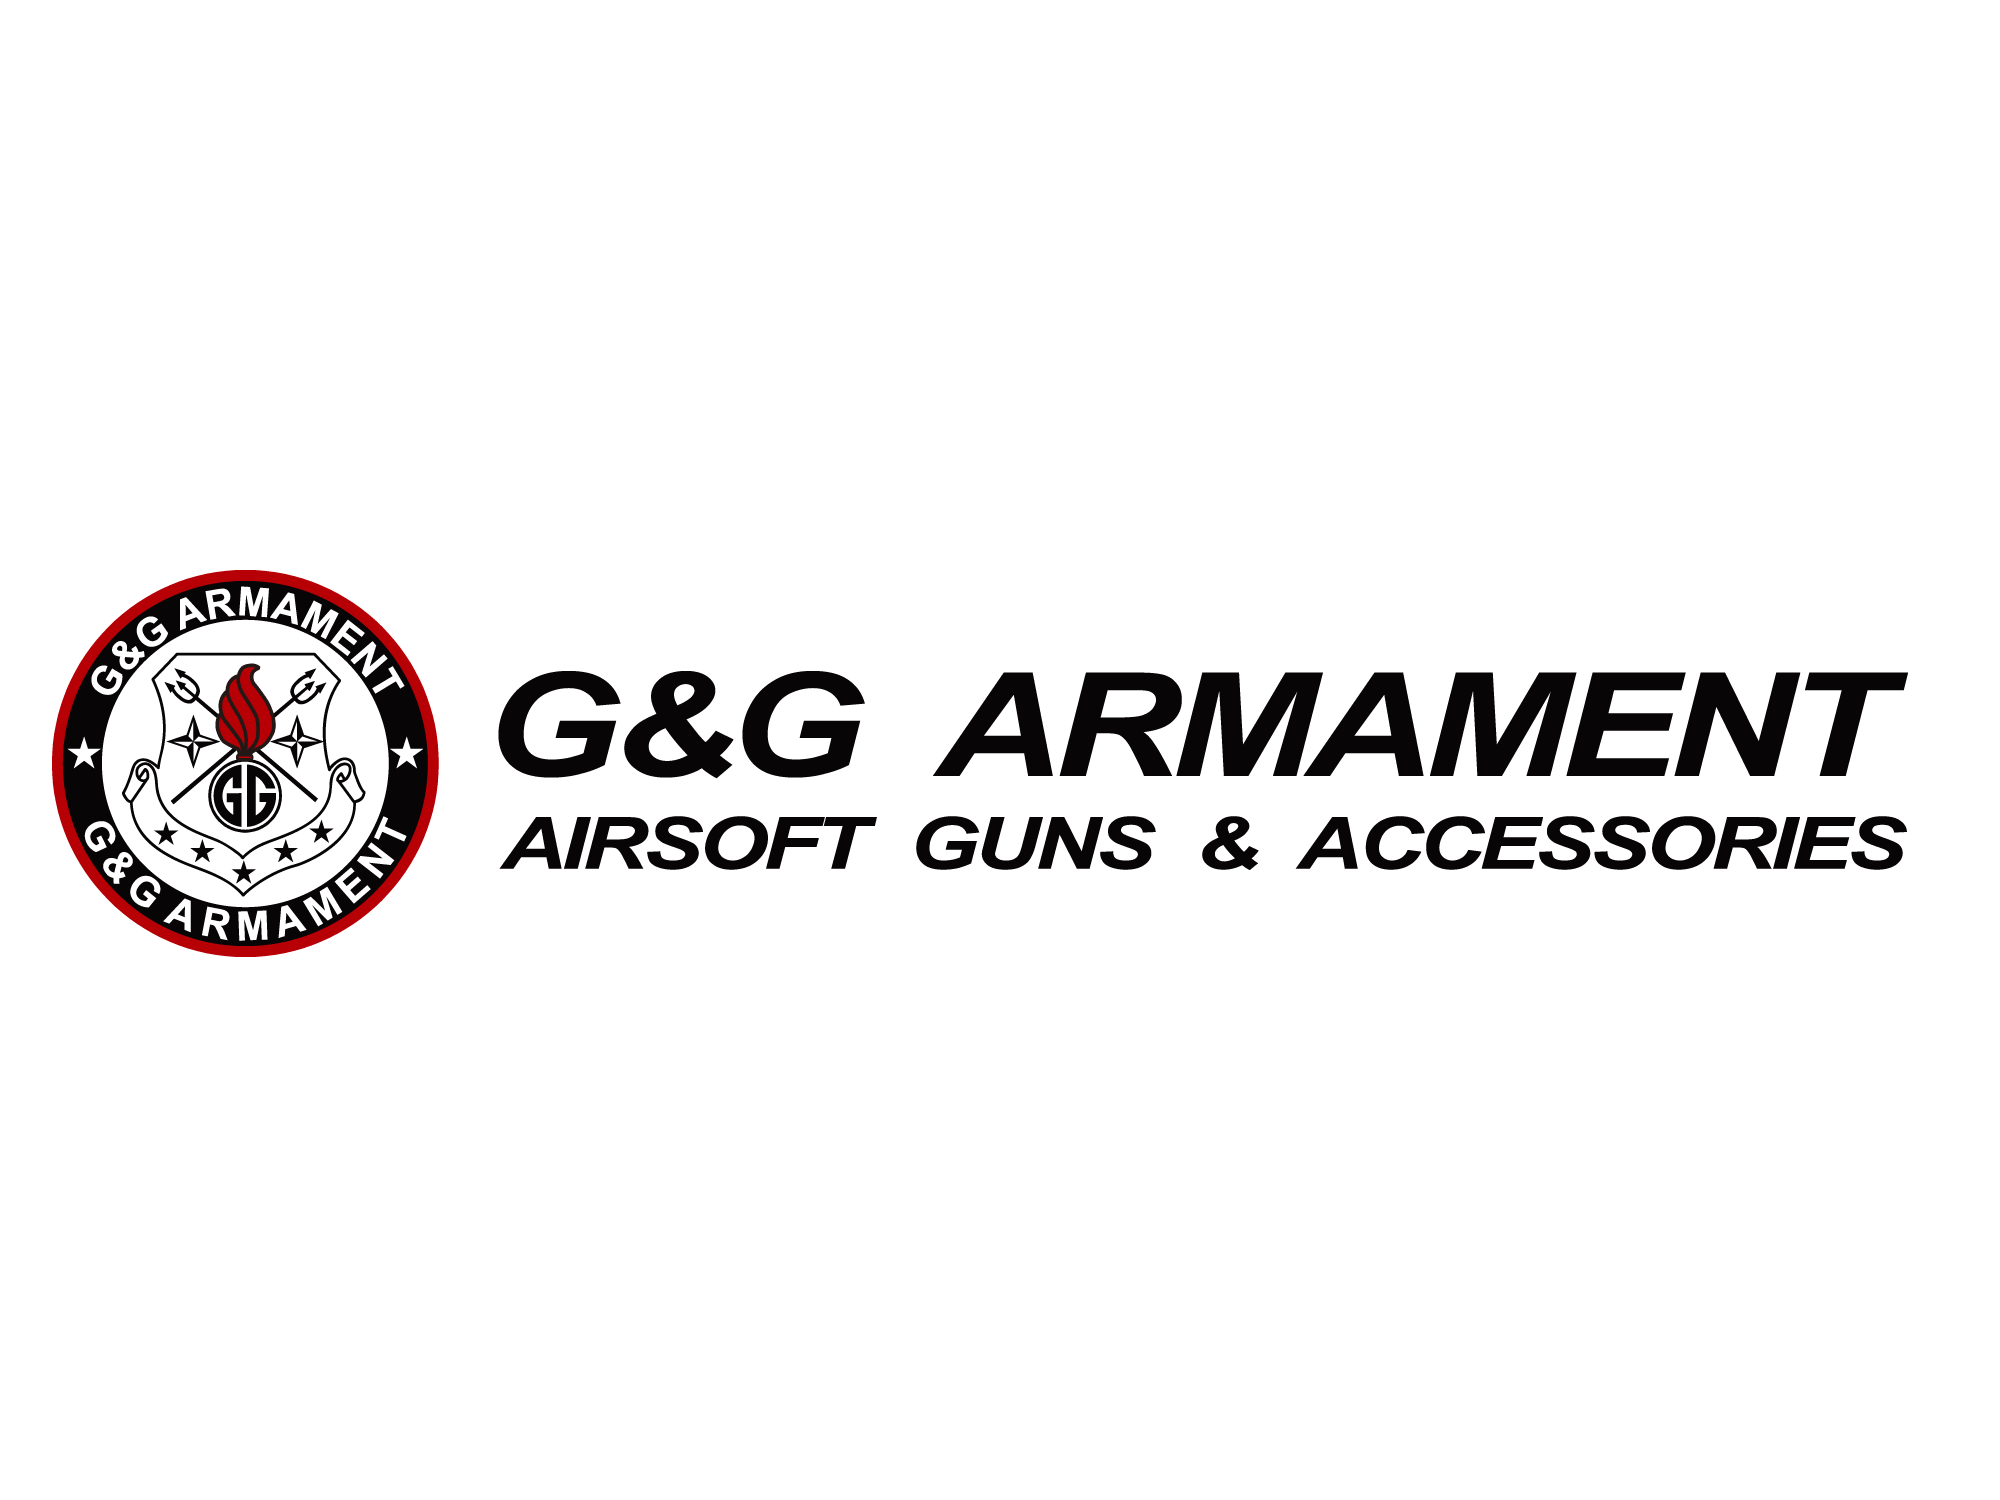 2022 G&G Armament Catalog by G&G ARMAMENT - Issuu